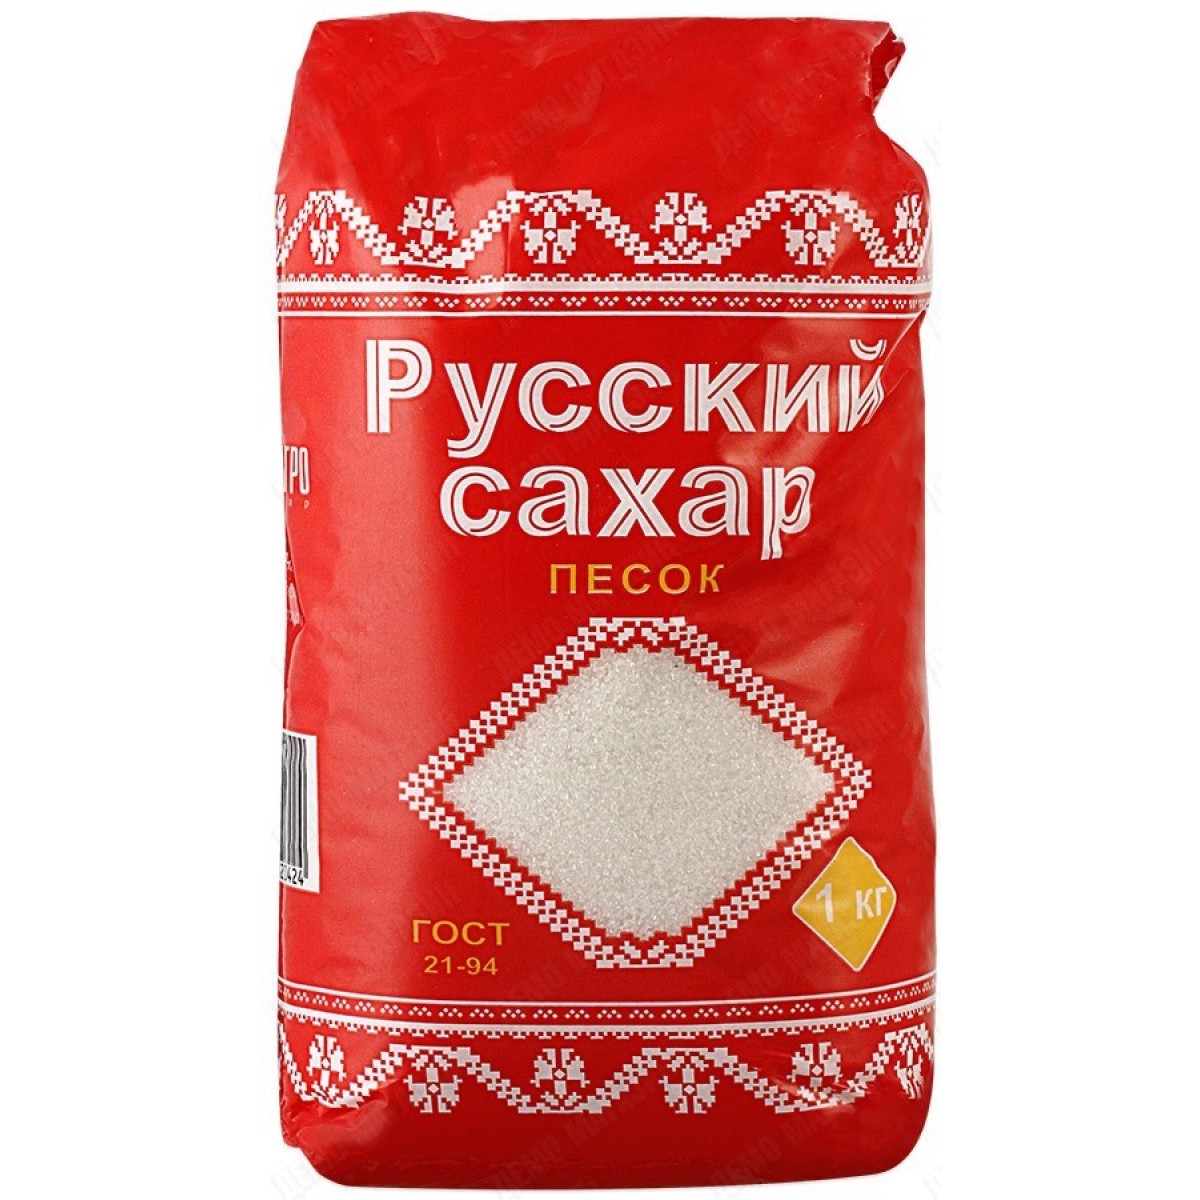 Сахар 200 кг. Сахар-песок русский сахар 5кг. Сахар песок 1 кг. Сахарный песок 1 кг. Упаковка сахара.